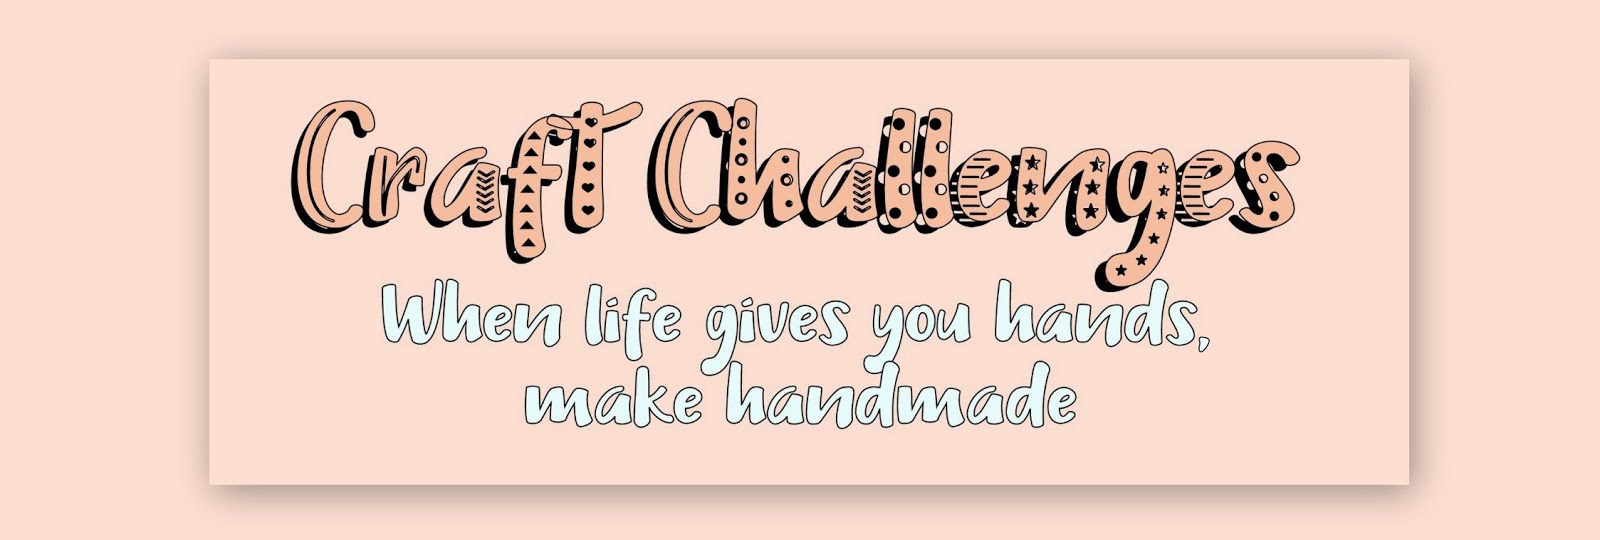 About Craft Challenge